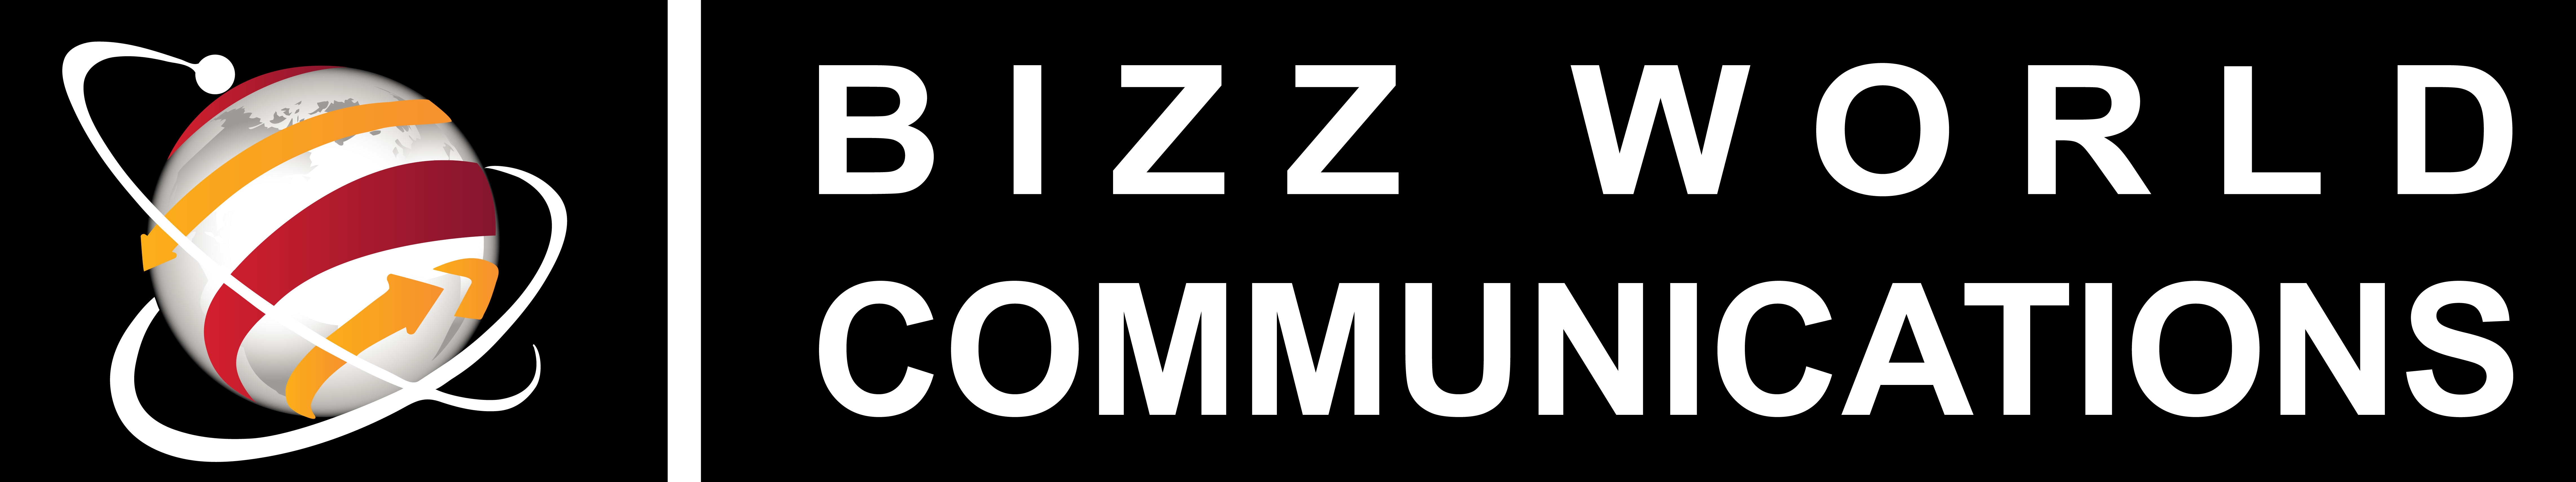 Bizz World Communications's profile banner